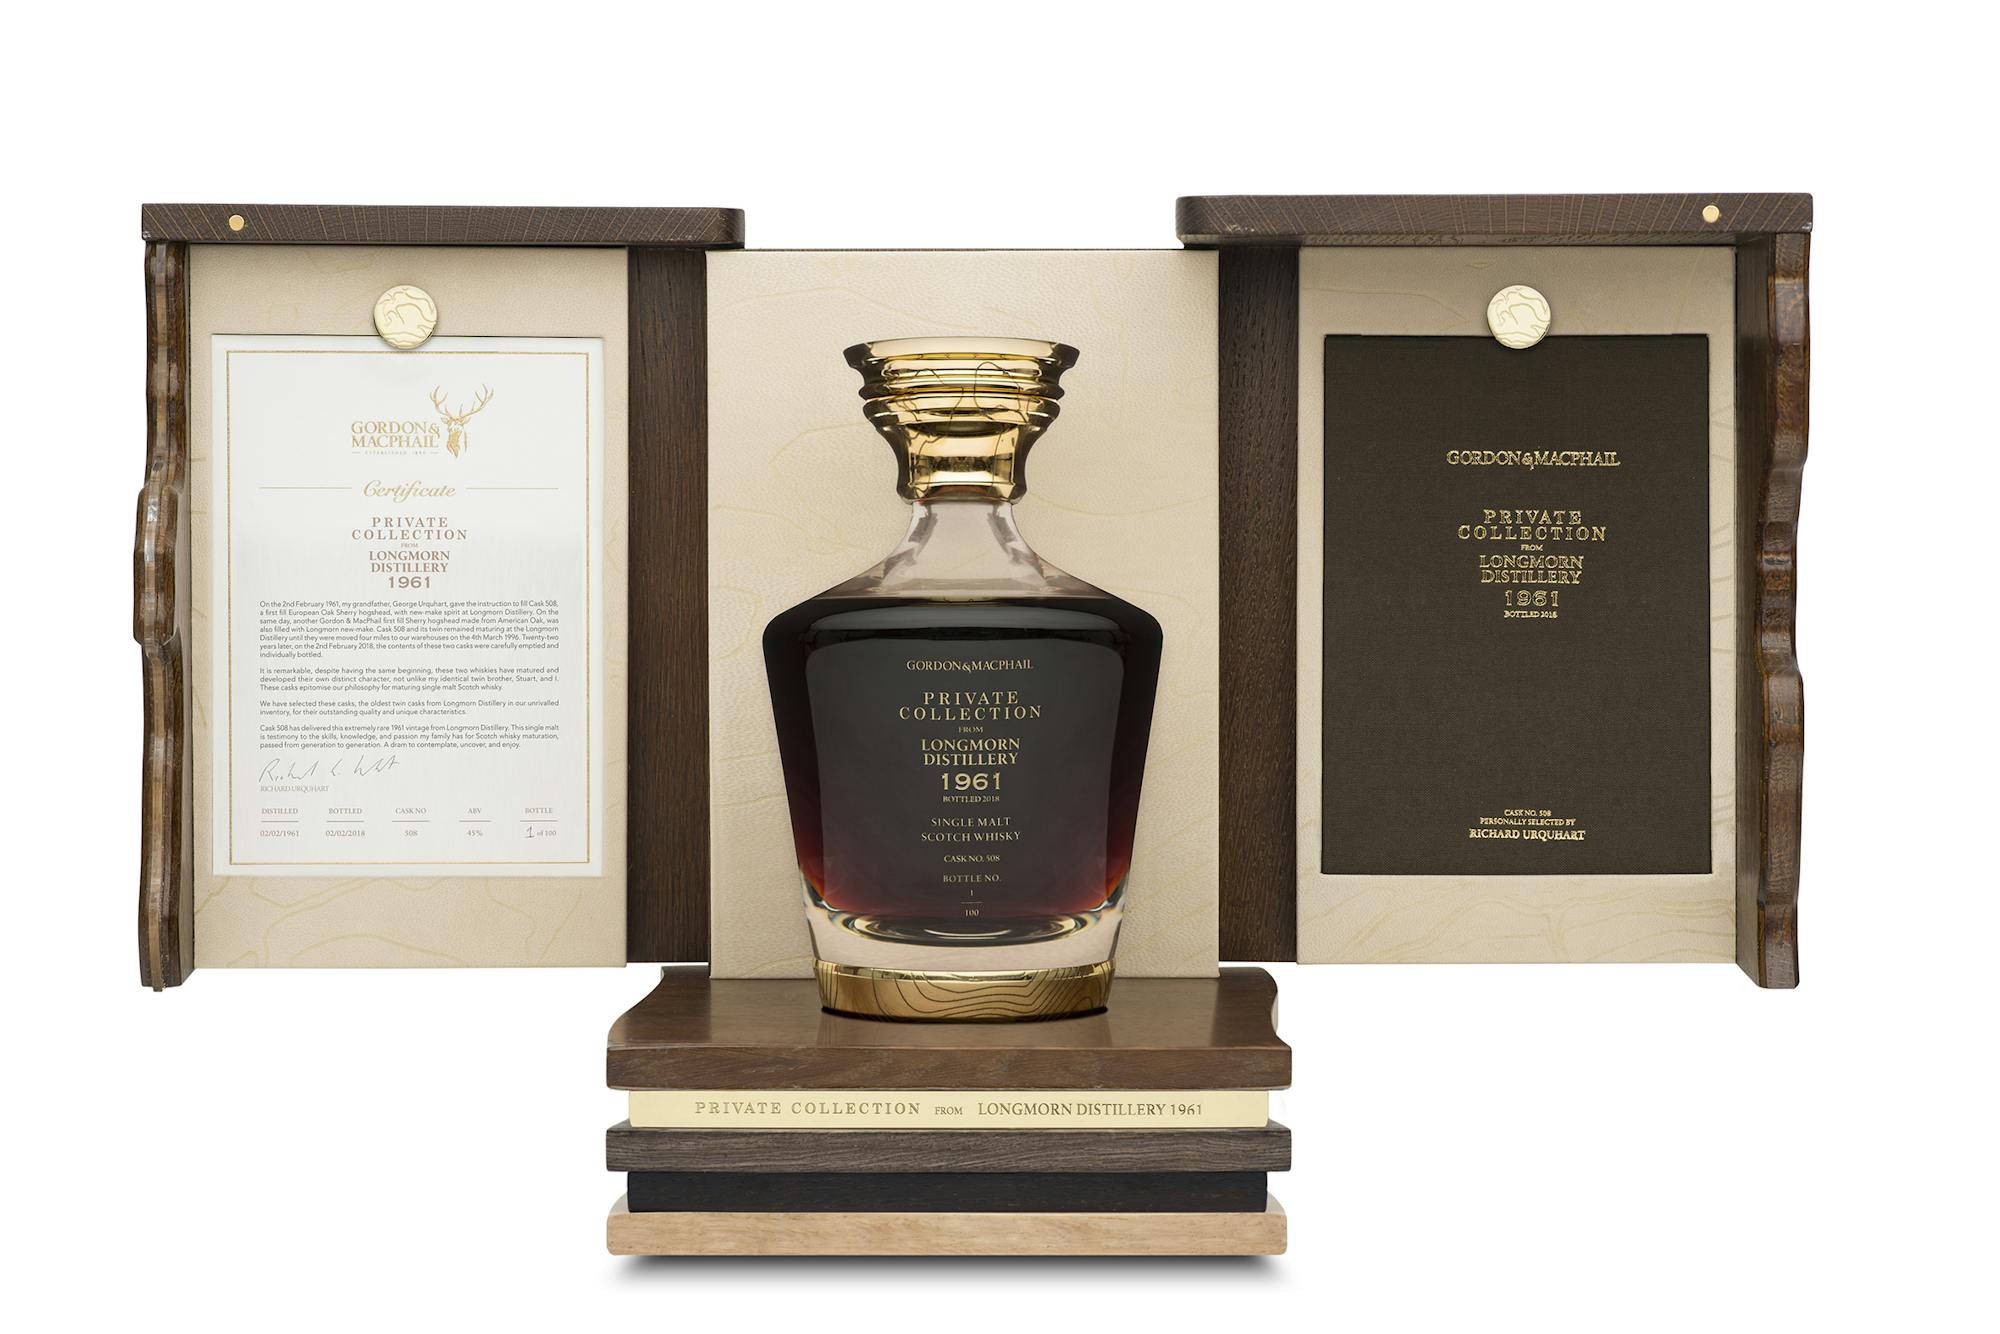 Gordon & MacPhail unveils twin Longmorn whiskies